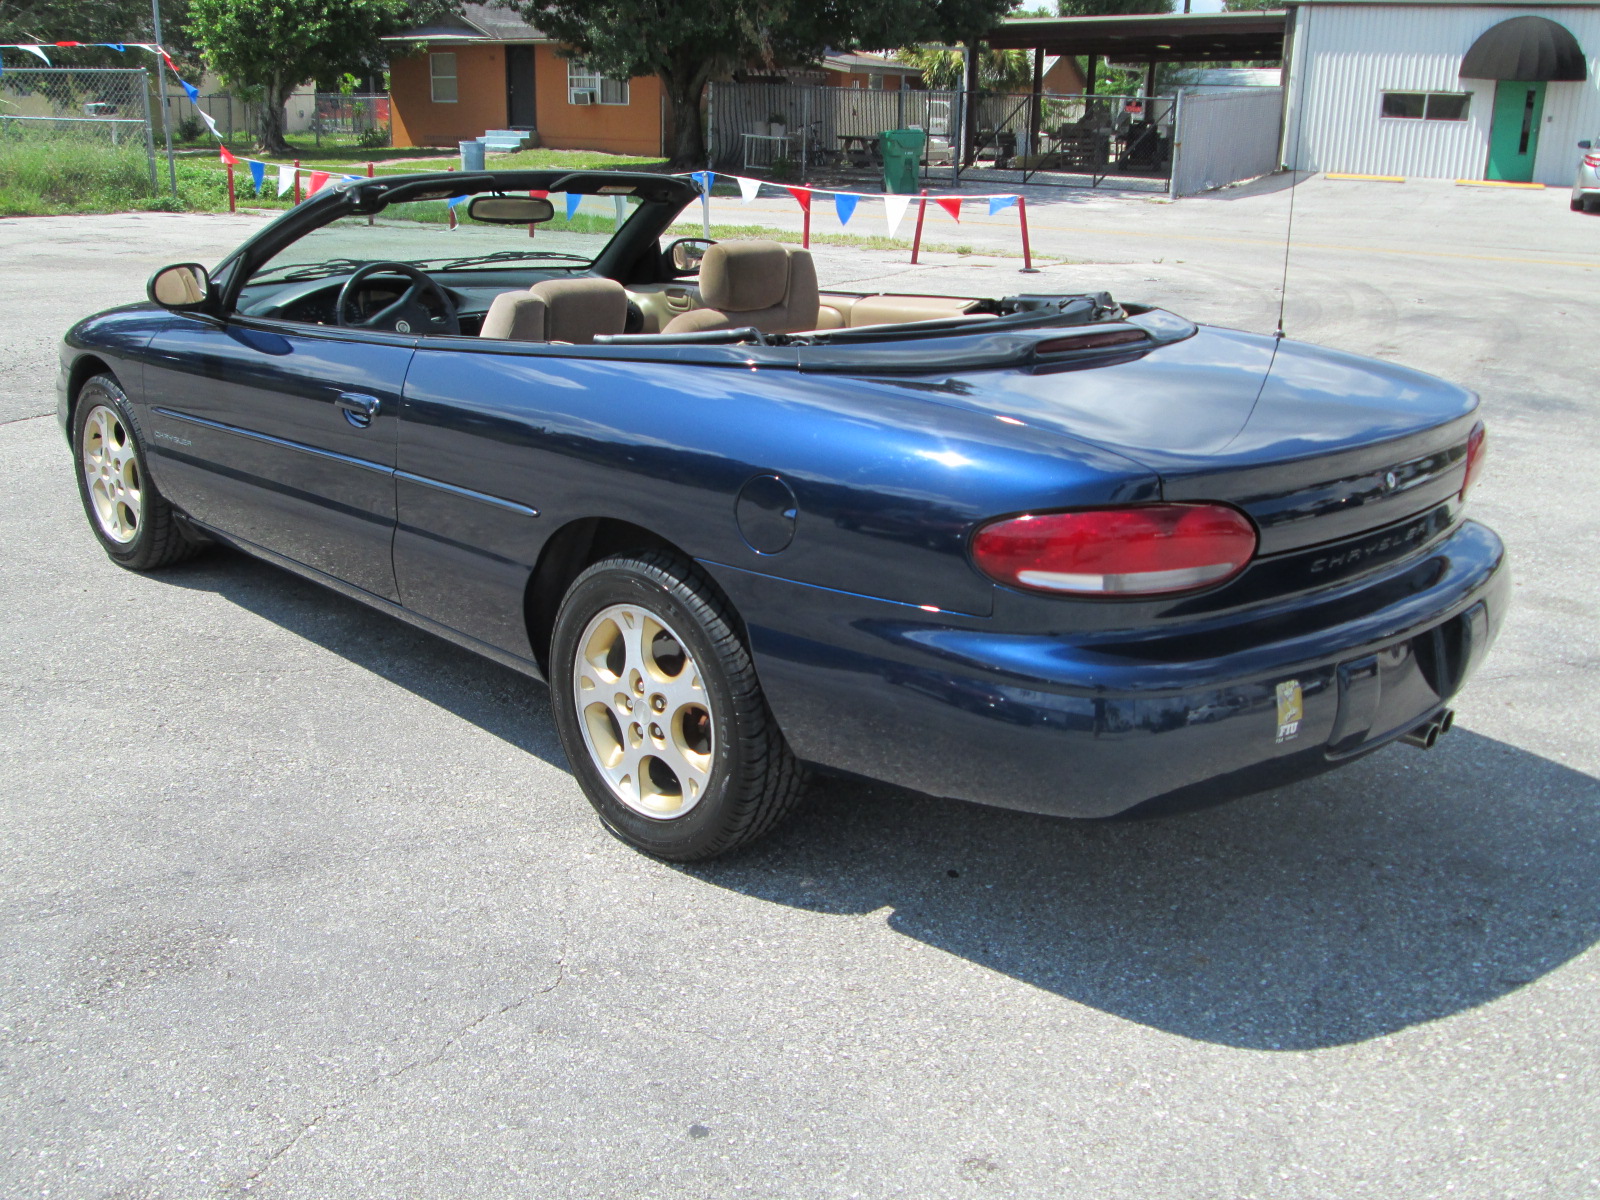 2000 Chrysler sebring body kits #3